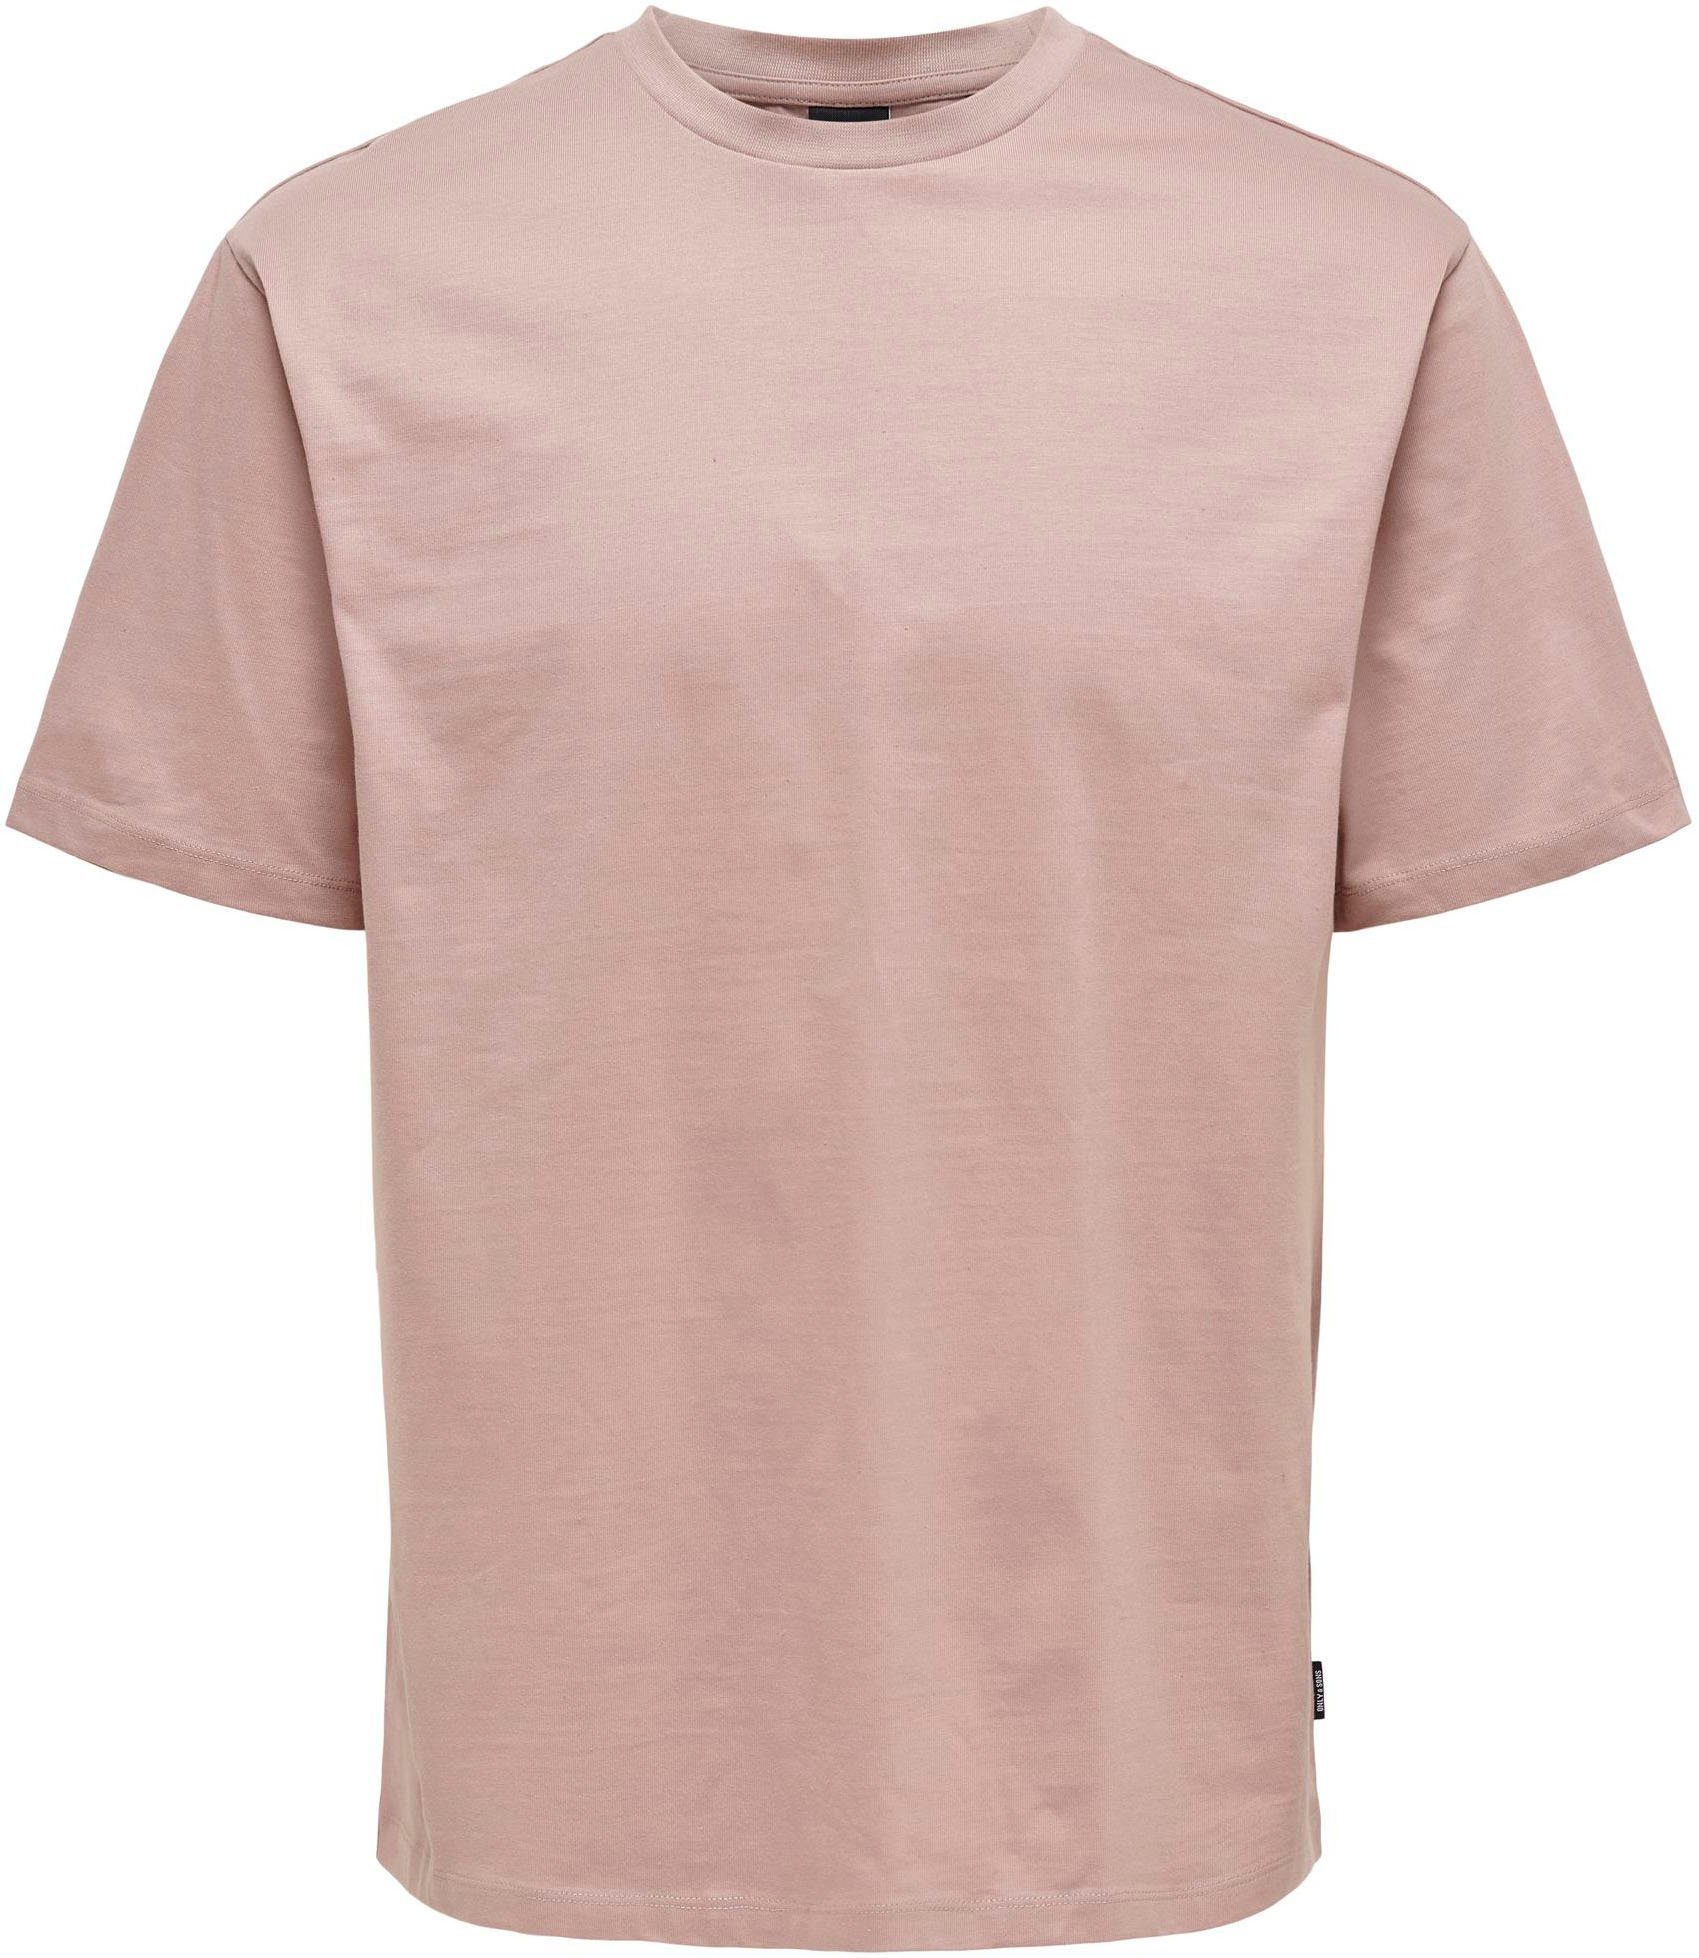 Rosa Herren-T-Shirt online kaufen » Pinkes T-Shirt Herren-| OTTO